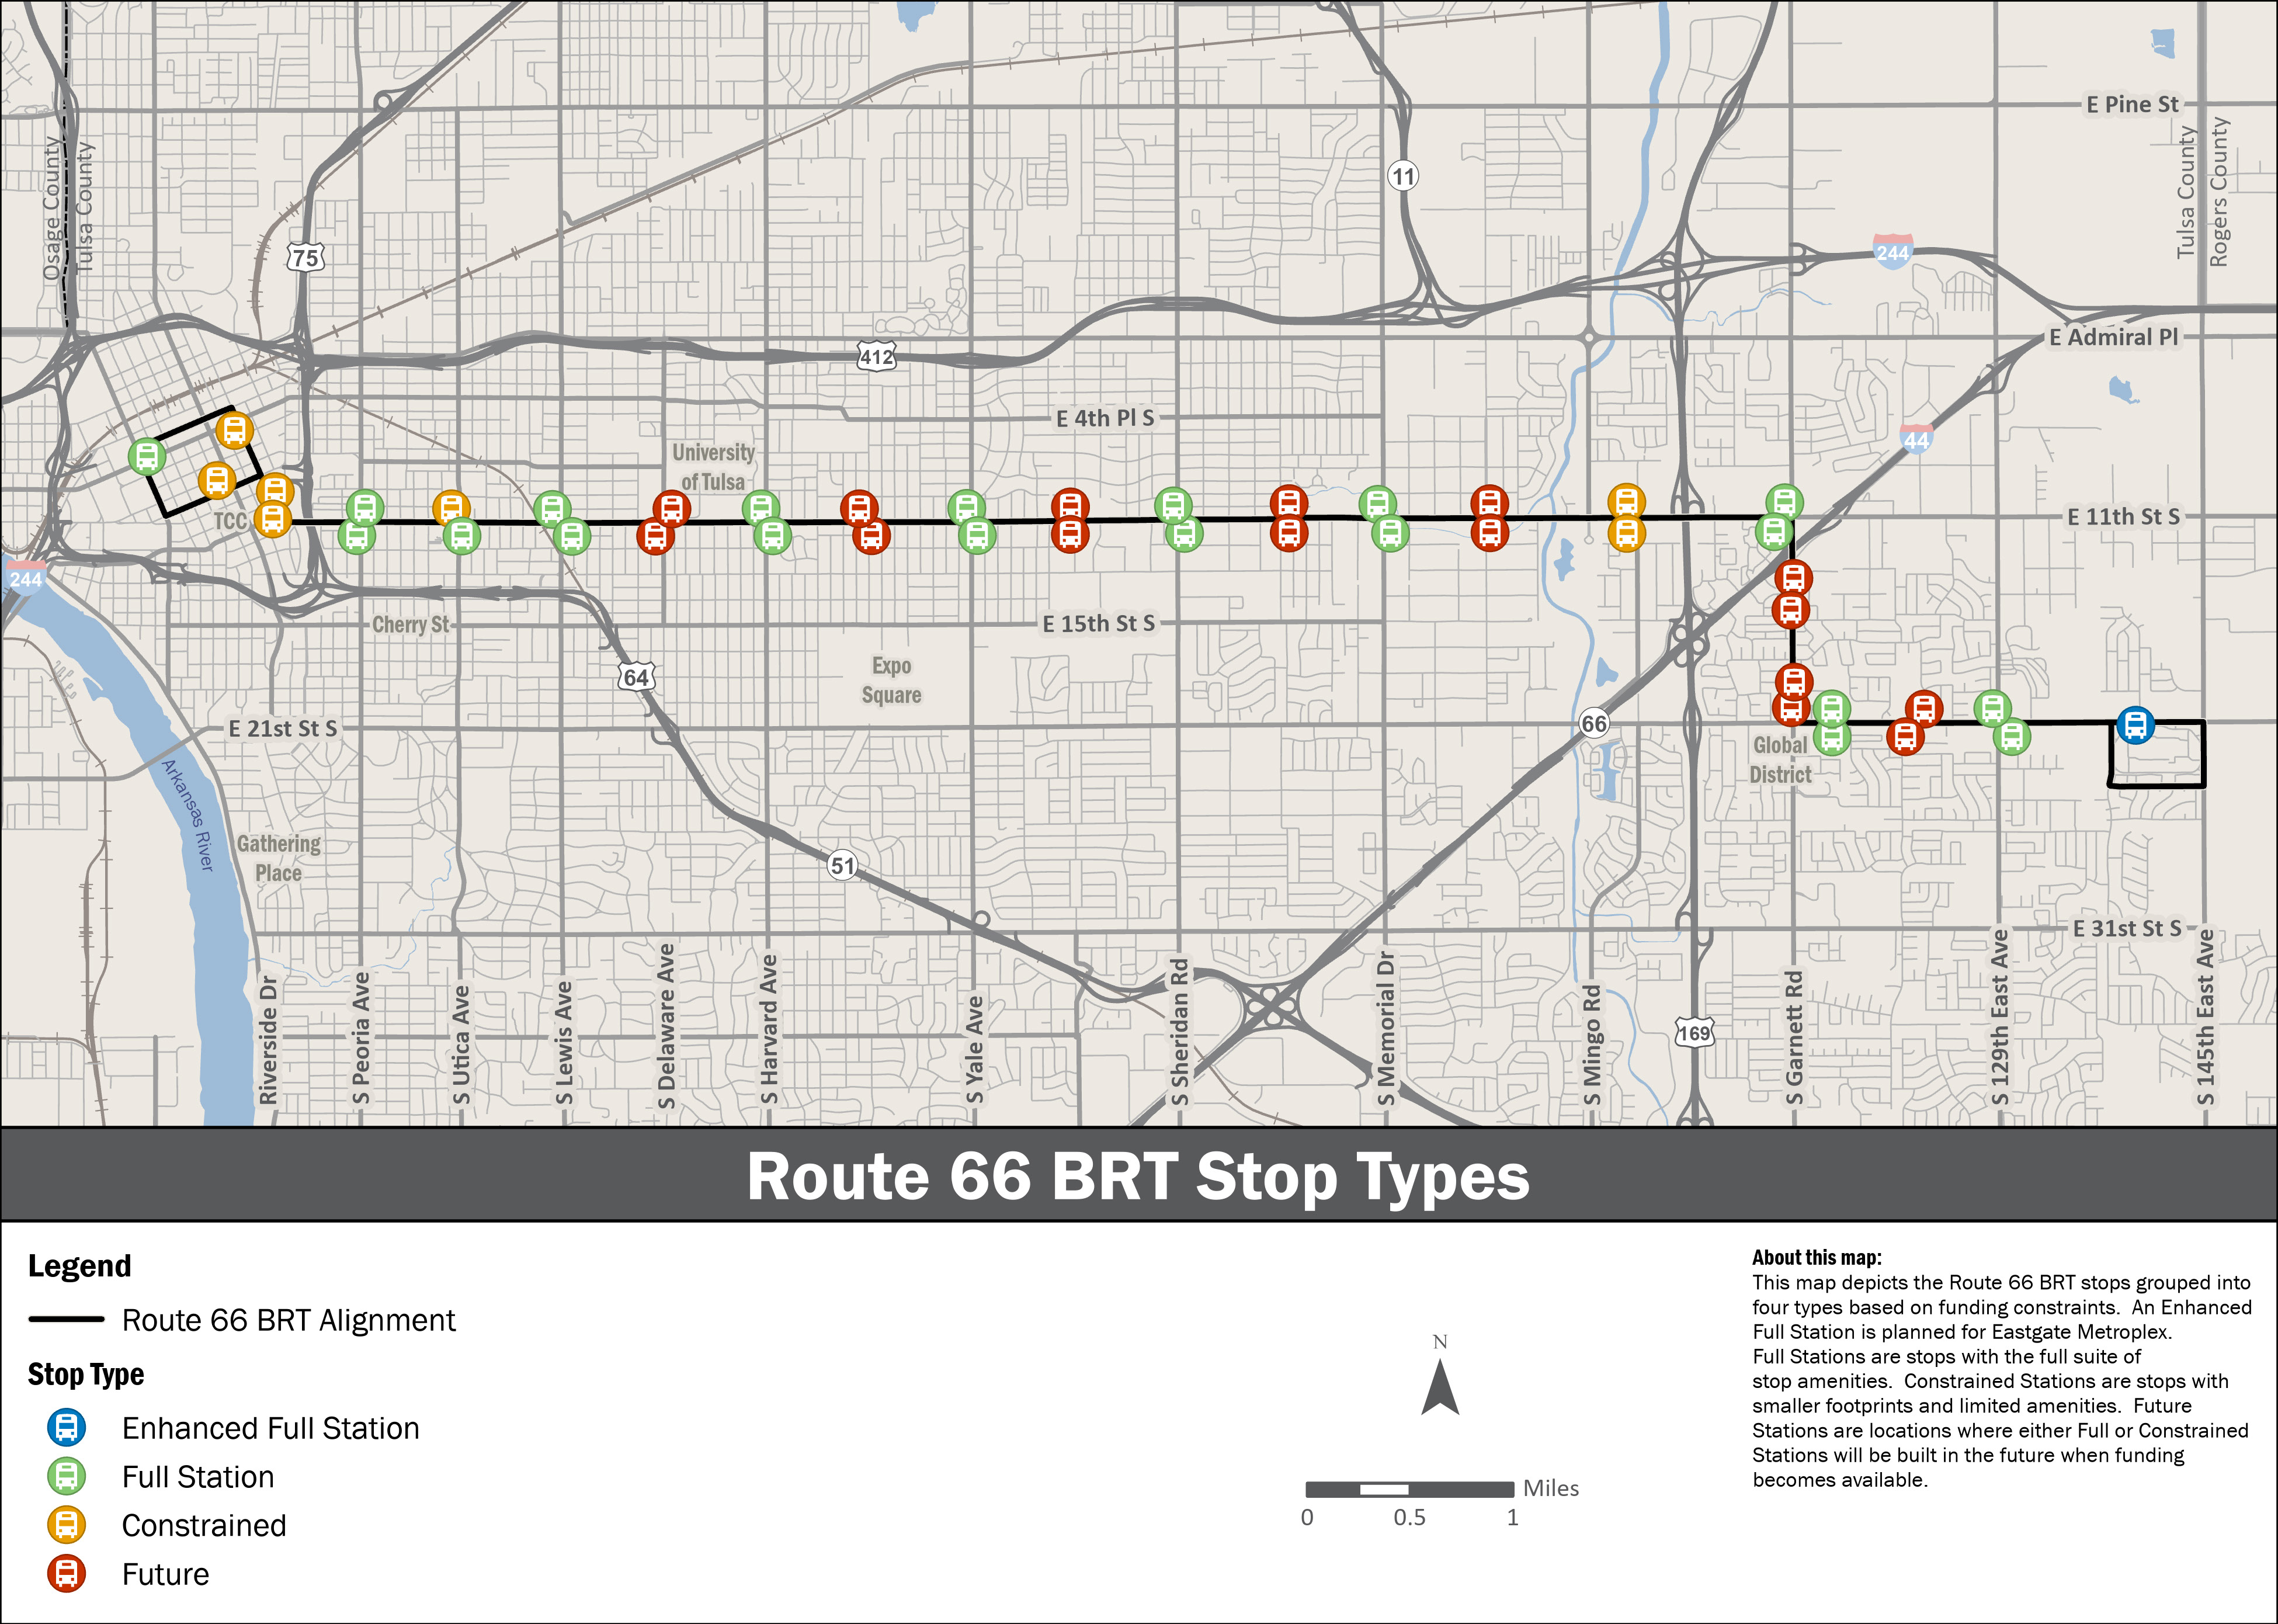 Route 66 BRT Stop Locations & Types